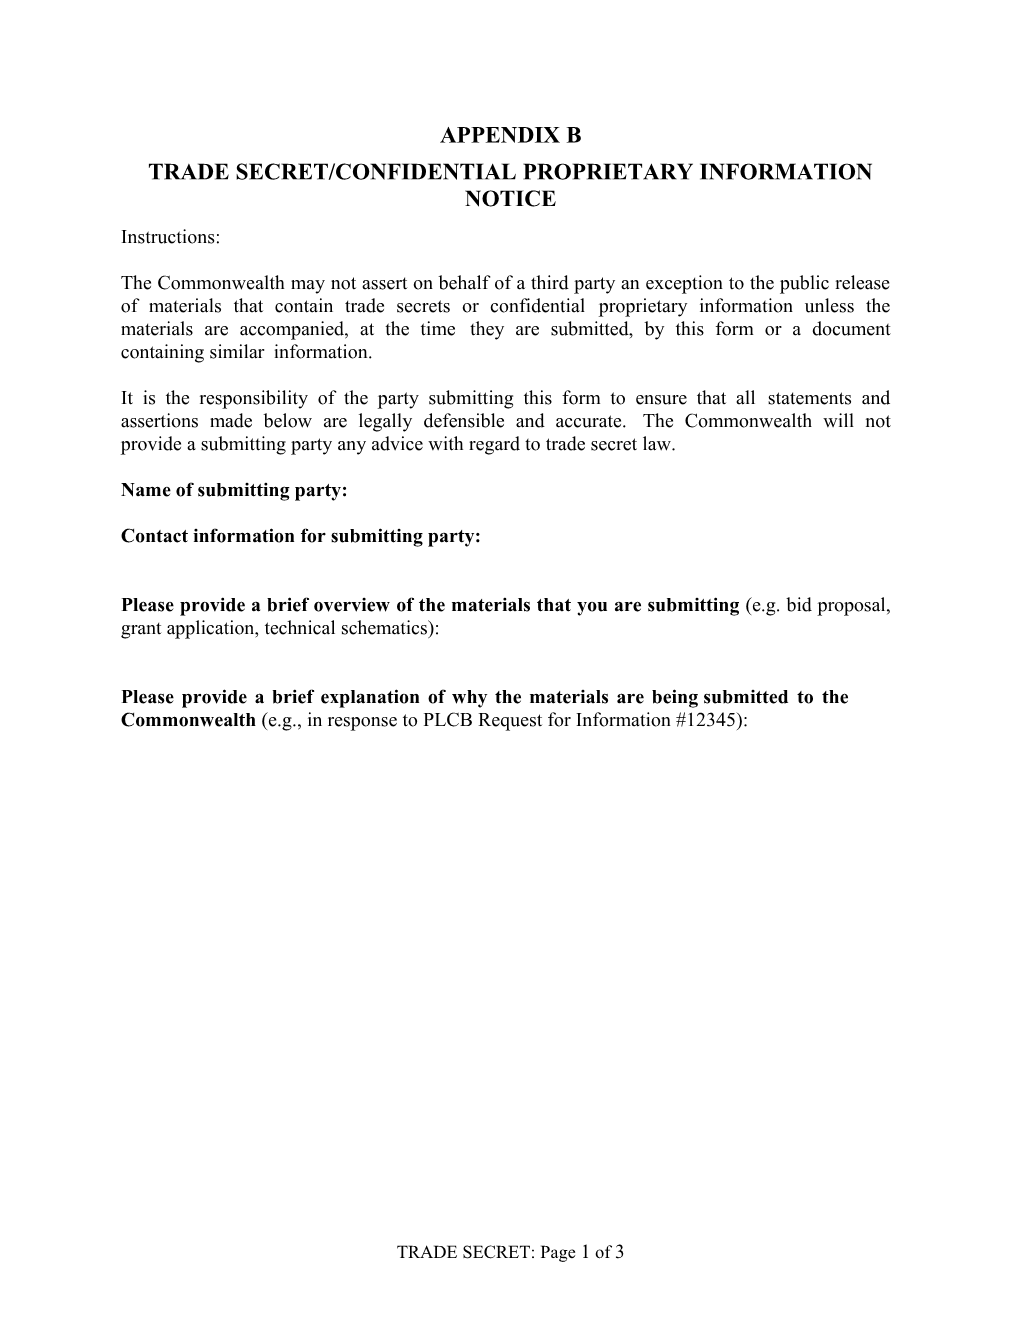 Trade Secret/Confidential Proprietary Information Notice